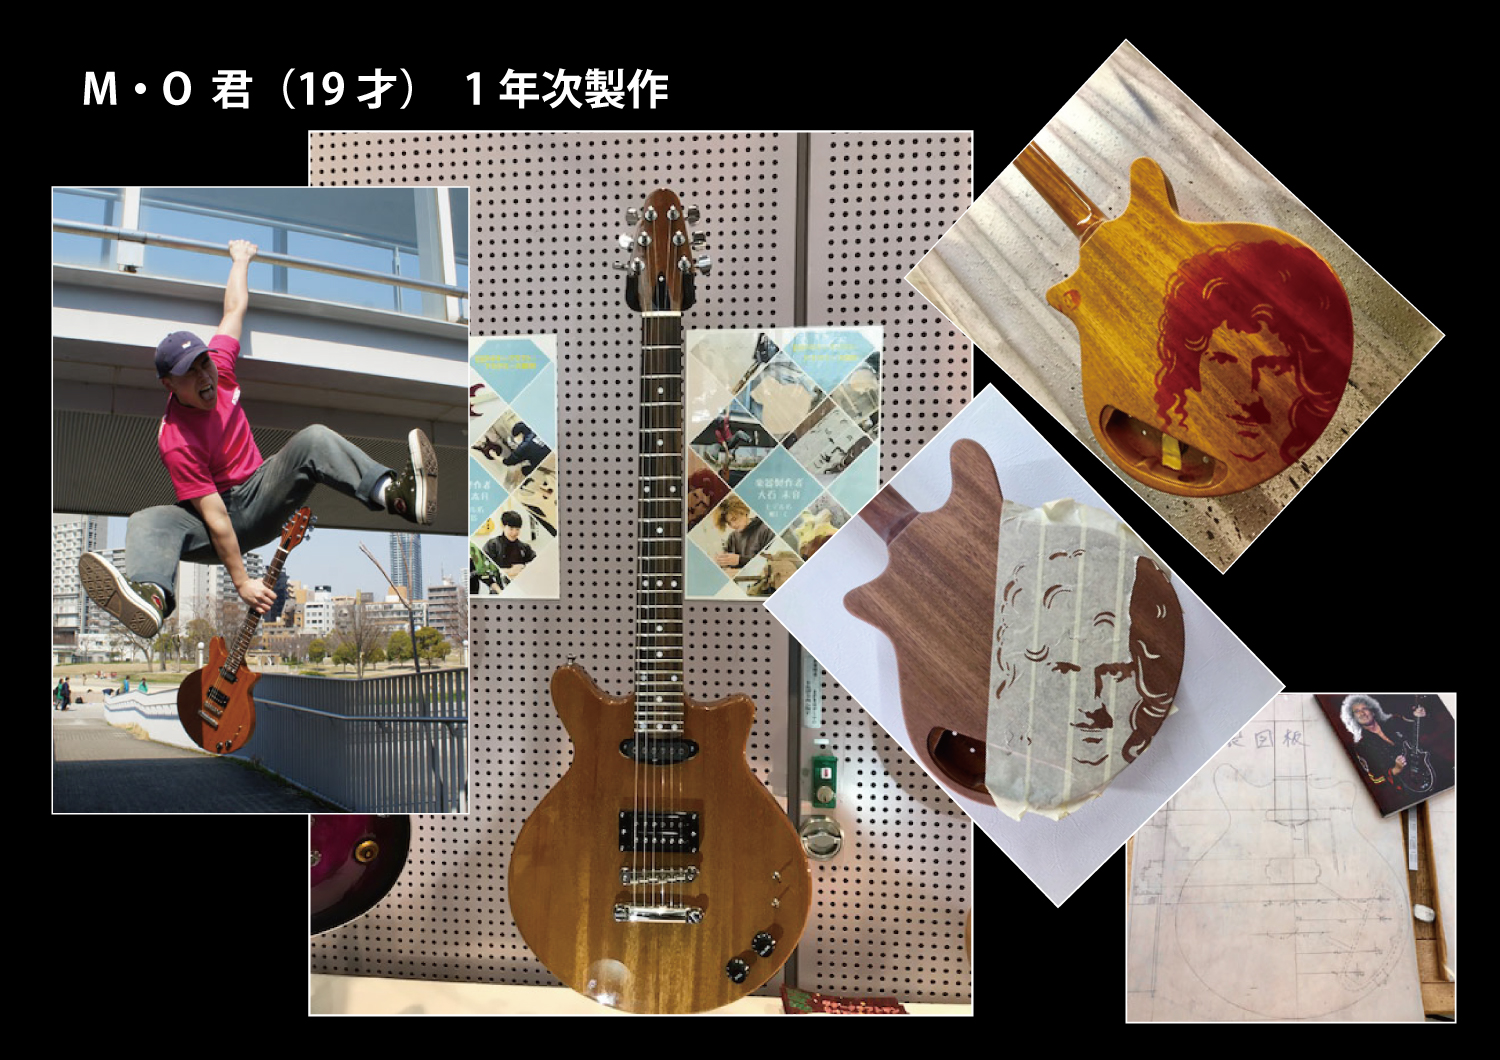 esp guitar craft academy osaka 大阪校（梅田）ESPギタークラフトアカデミー ギター甲子園2019